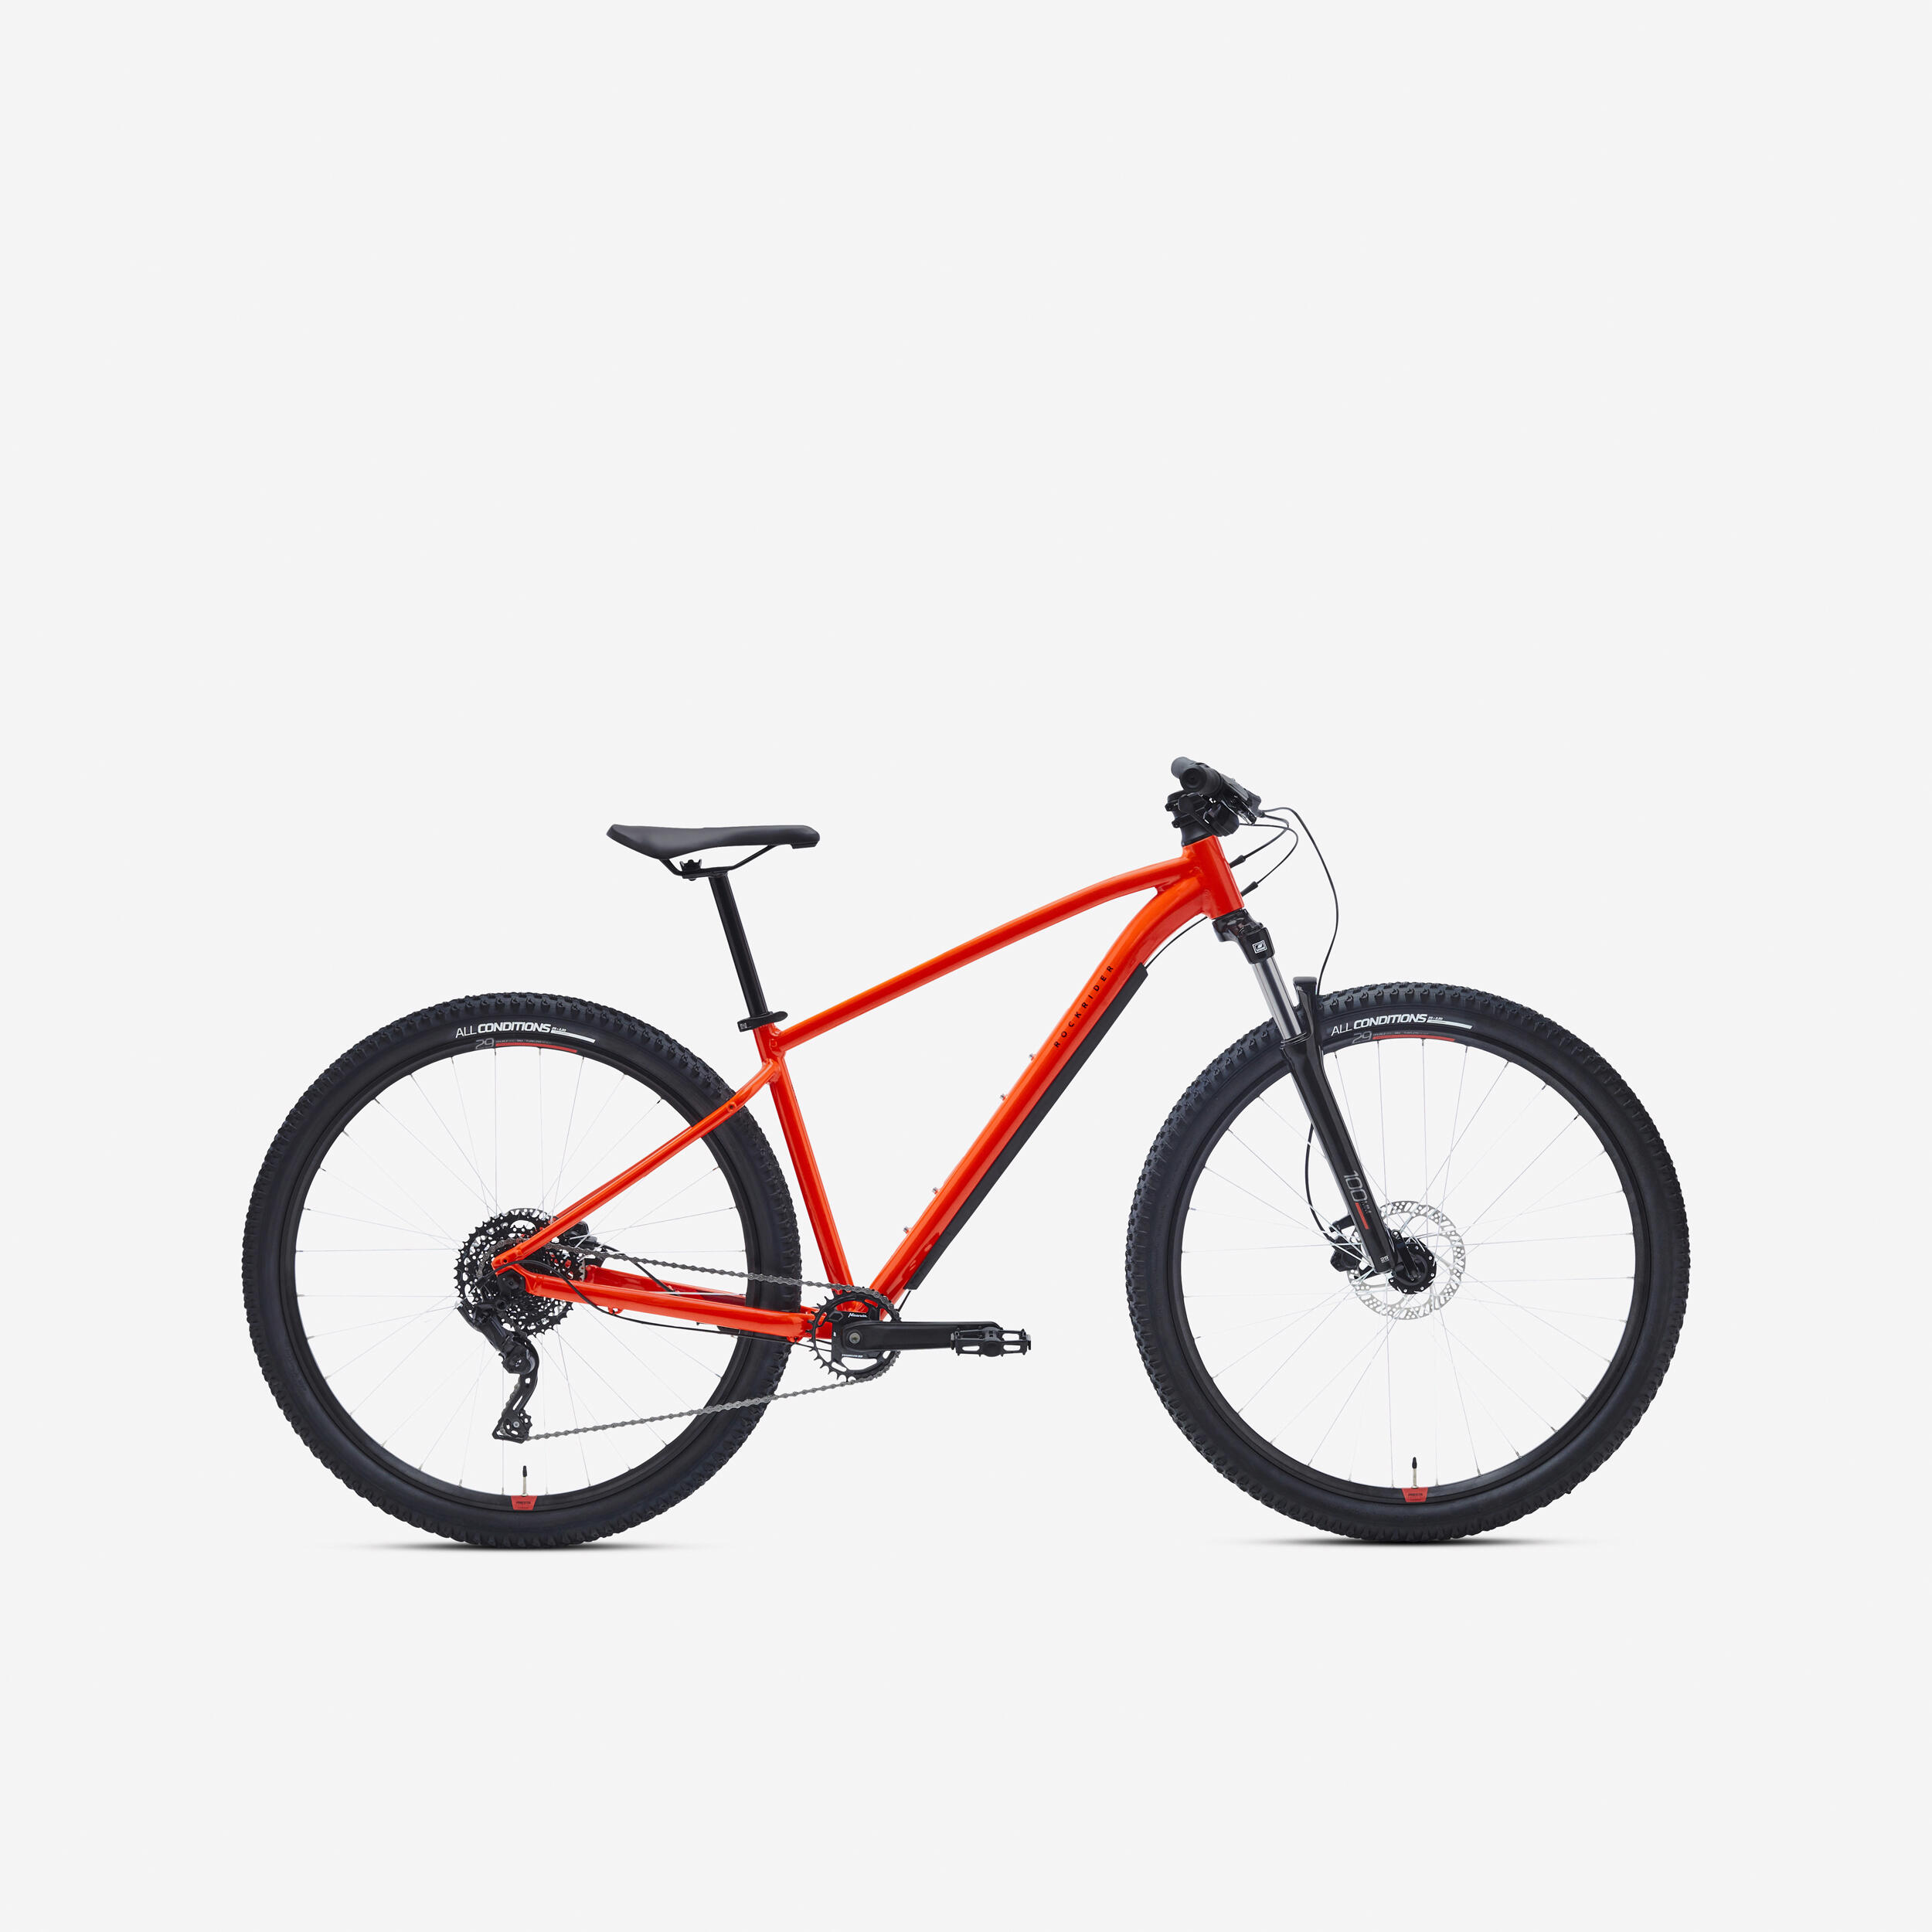 29" Touring Mountain Bike Expl 500 - Red 1/10